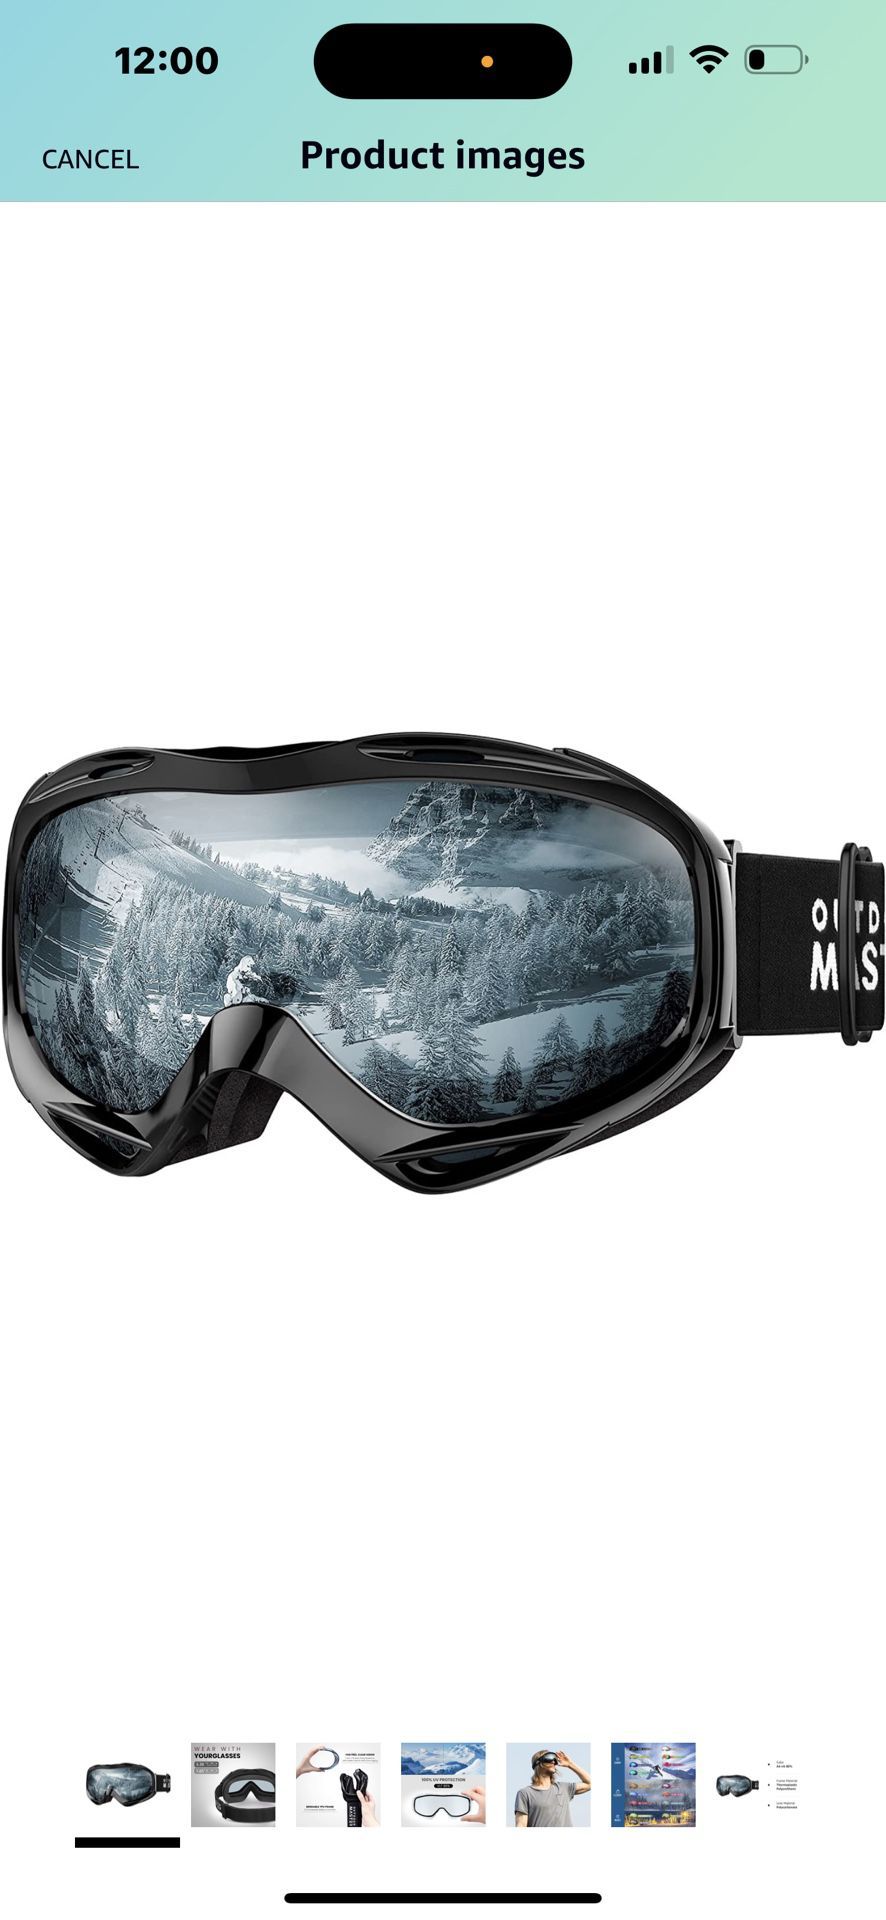 New Snowboard Goggles 